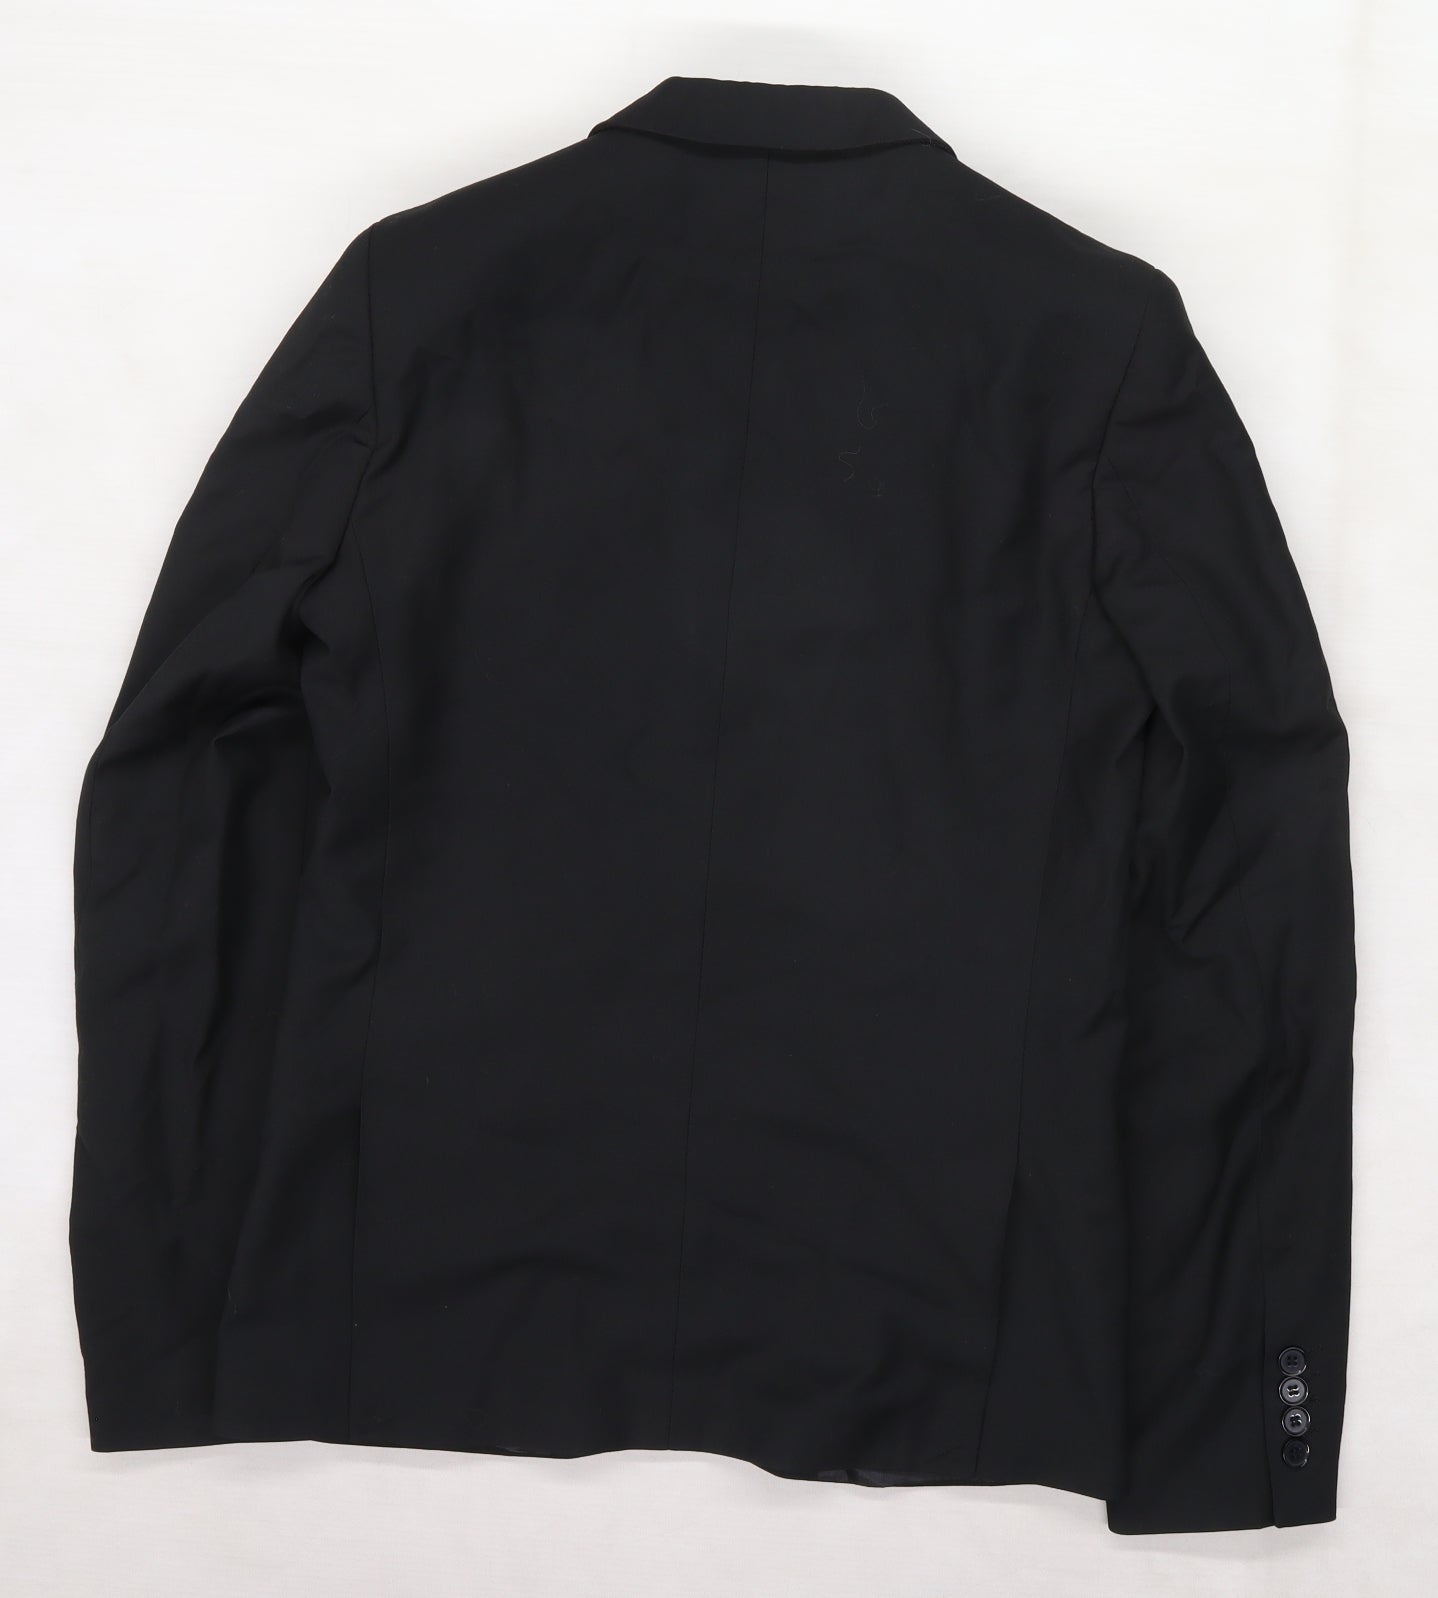 Backflip Boys Black   Jacket  Size 14 Years  - Suit Jacket